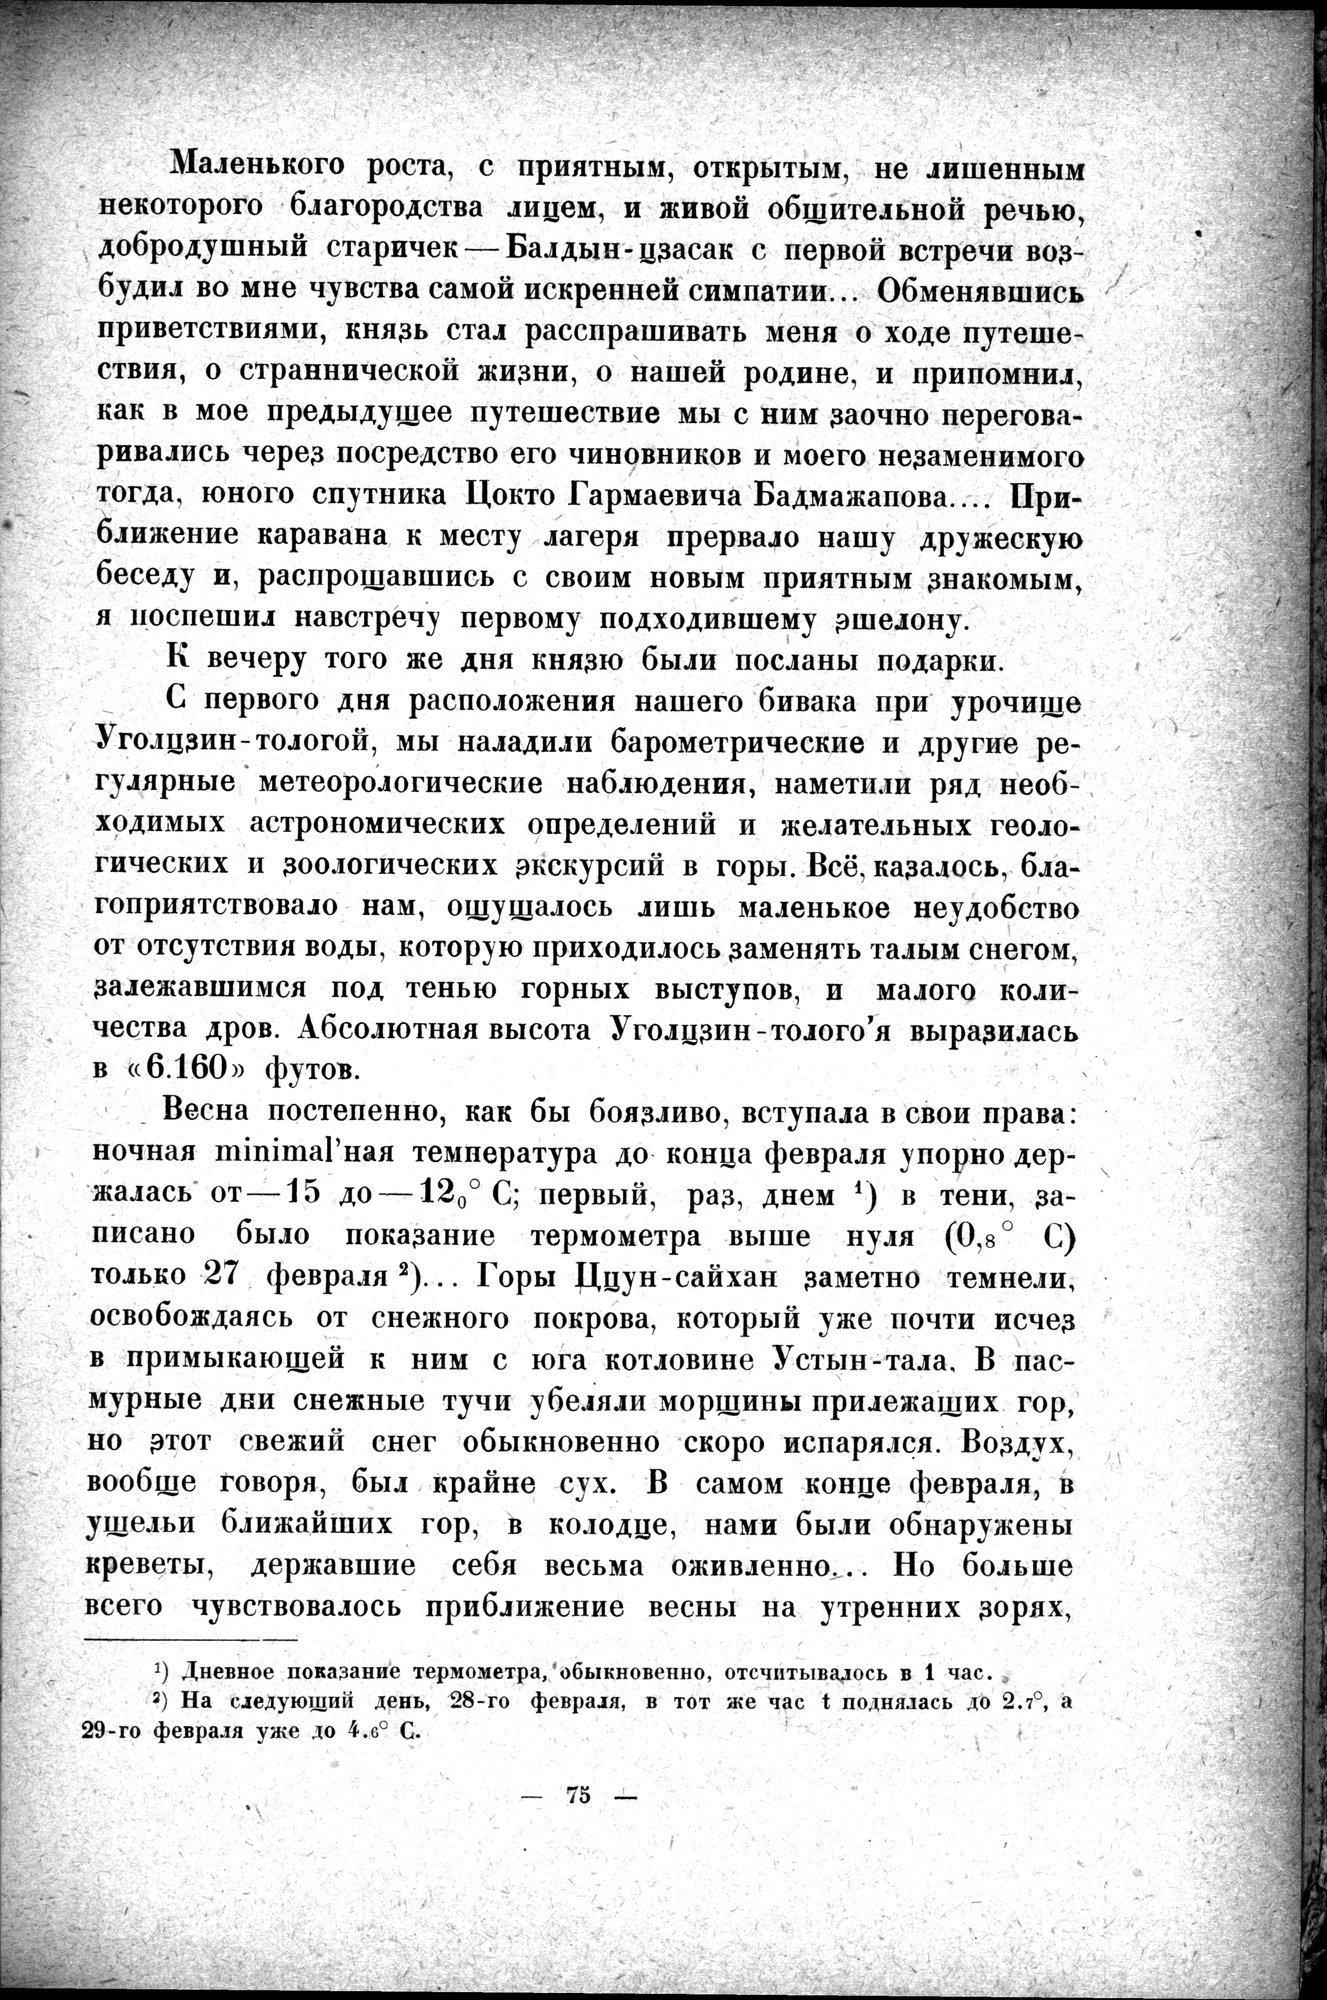 Mongoliya i Amdo i mertby gorod Khara-Khoto : vol.1 / Page 99 (Grayscale High Resolution Image)